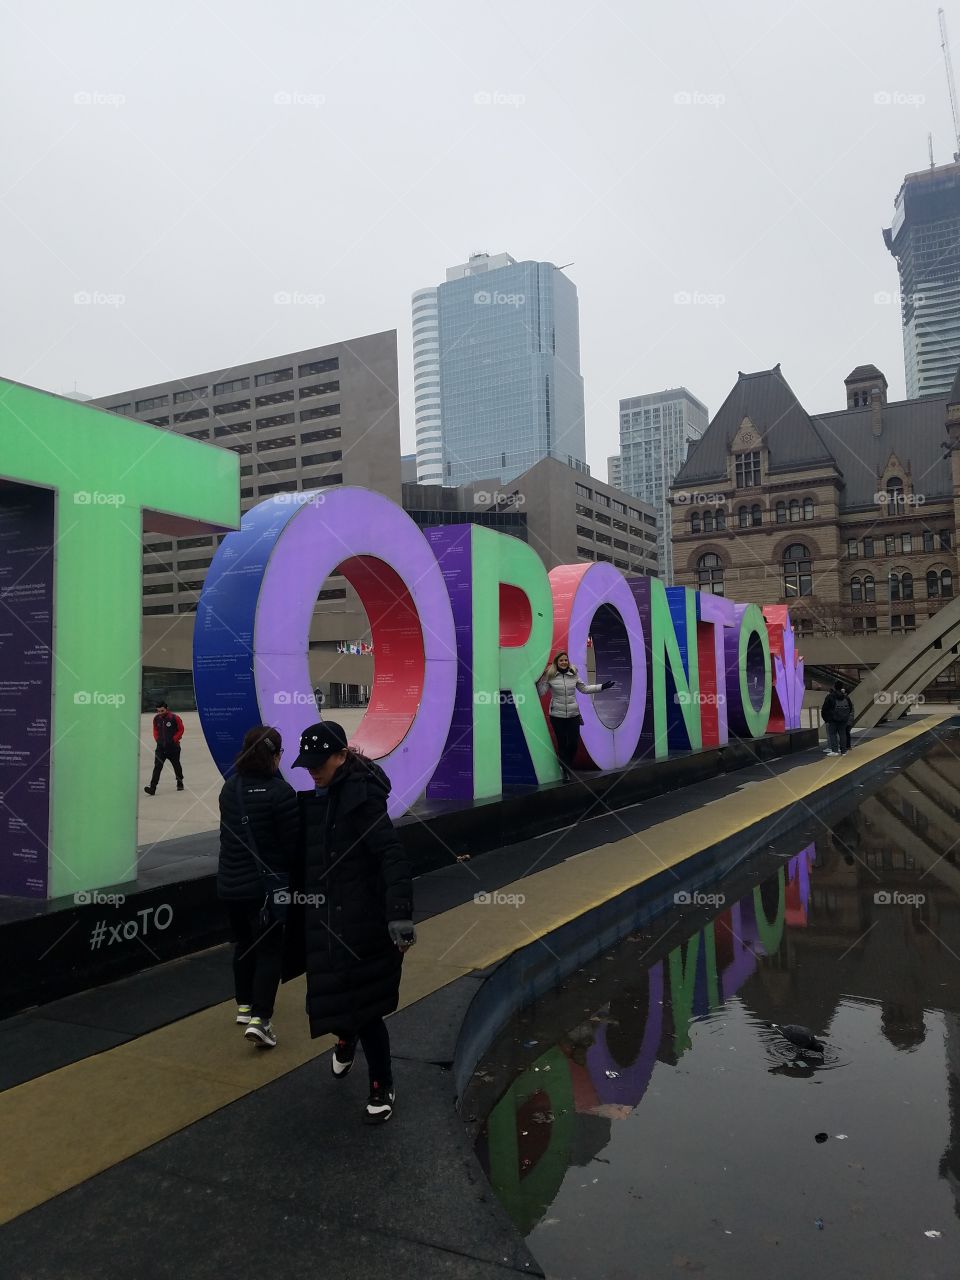 Toronto's tourist attraction